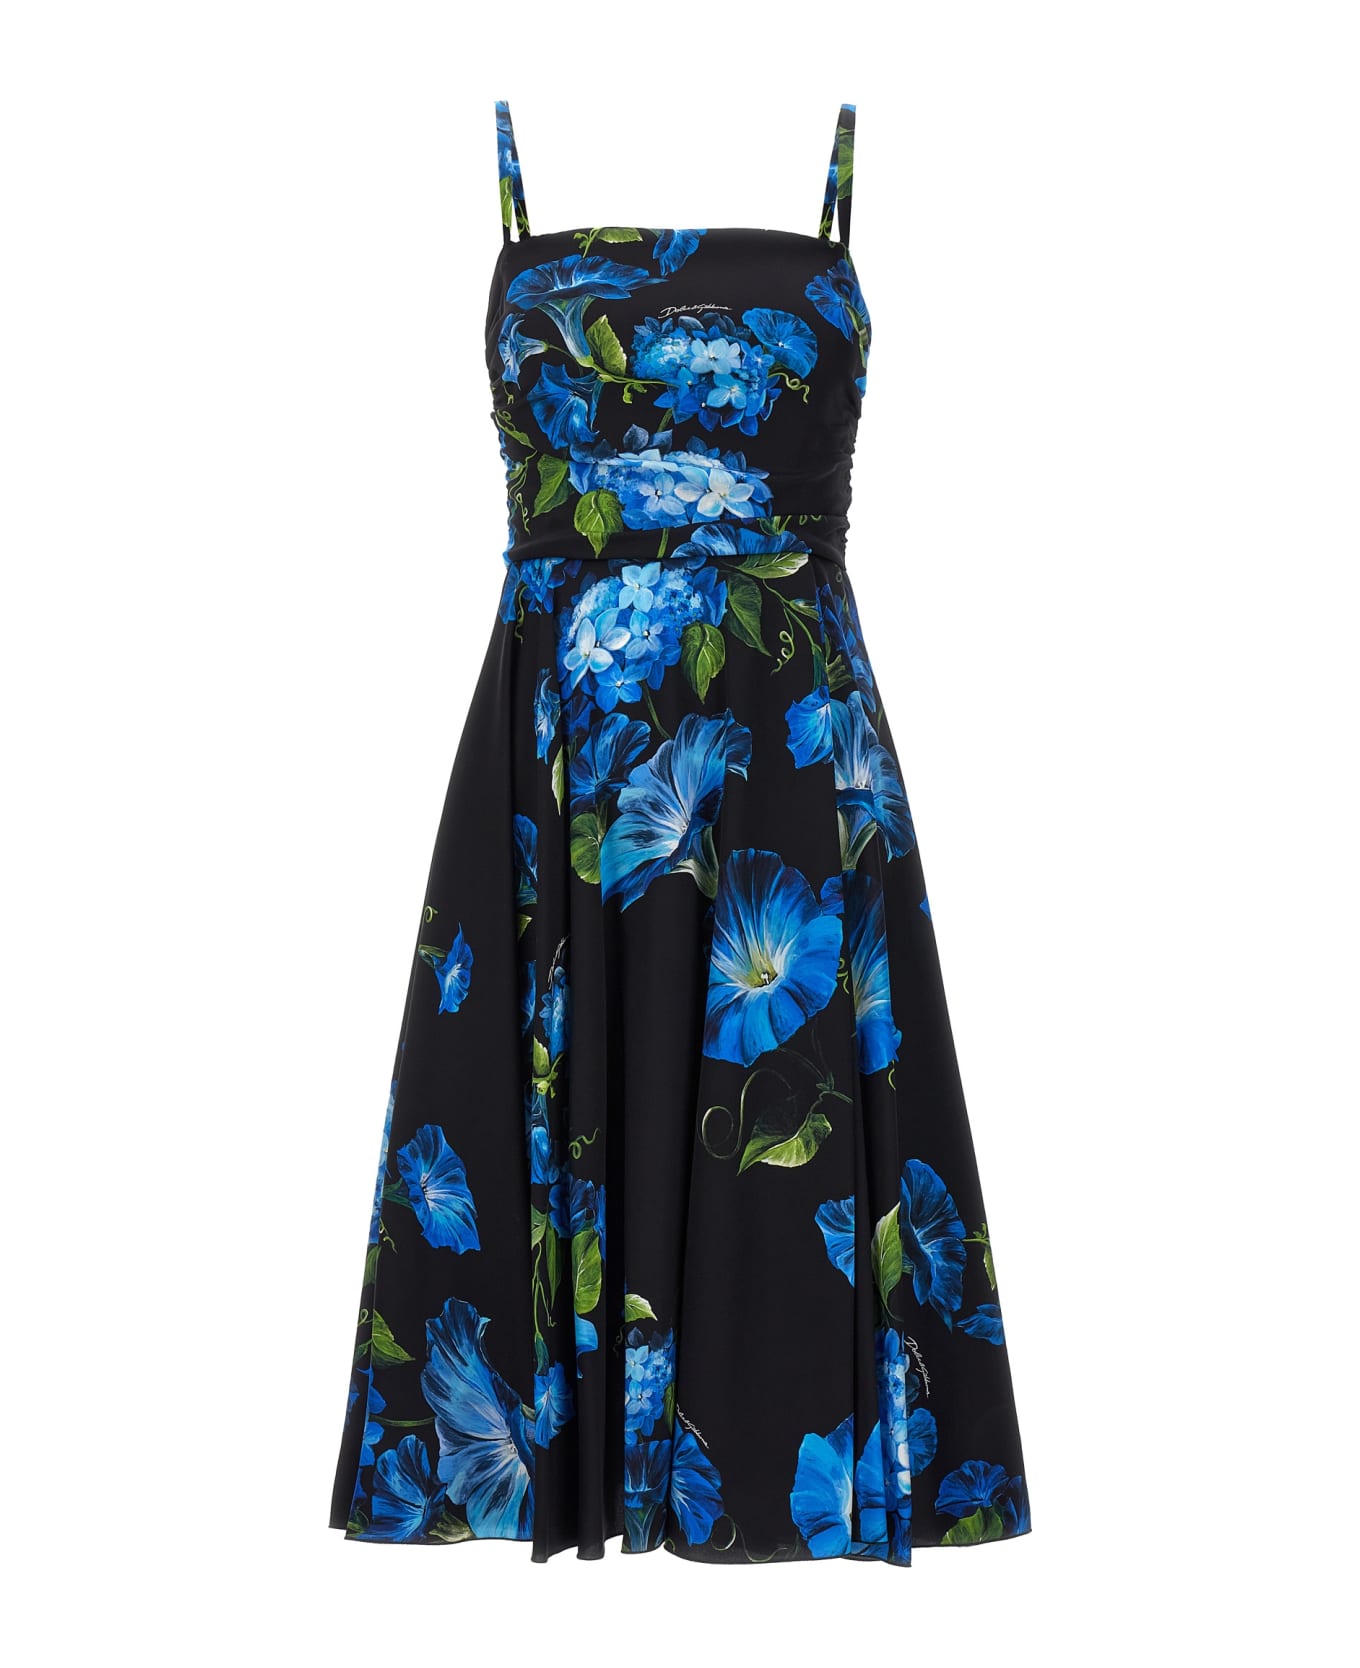 Dolce & Gabbana Floral Print Dress - Black